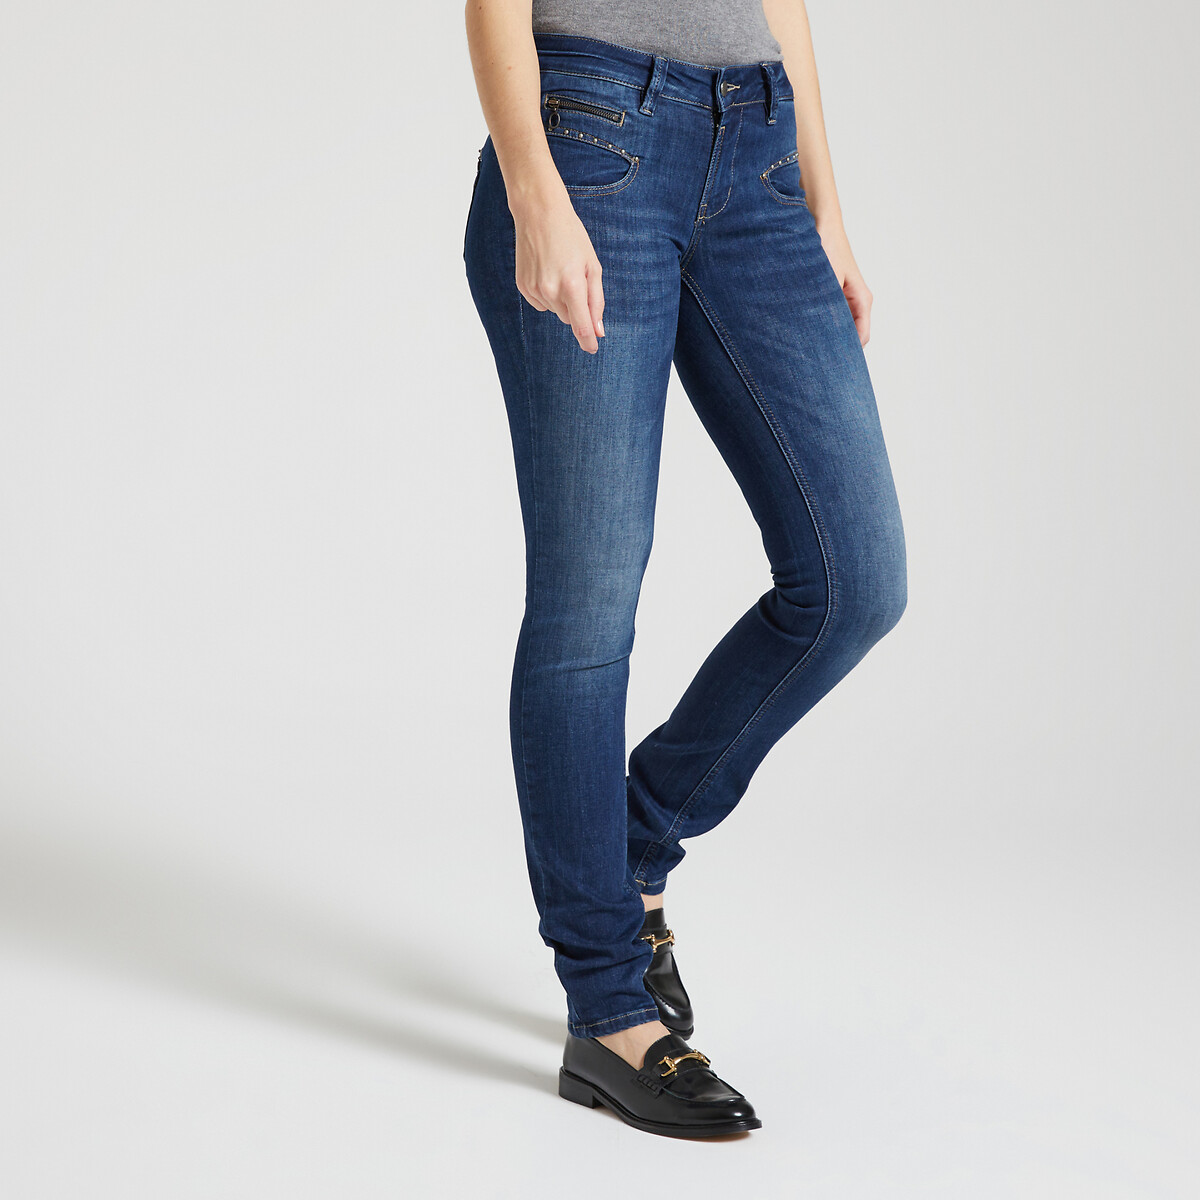 Alexa slim fit jeans, length 32.5\